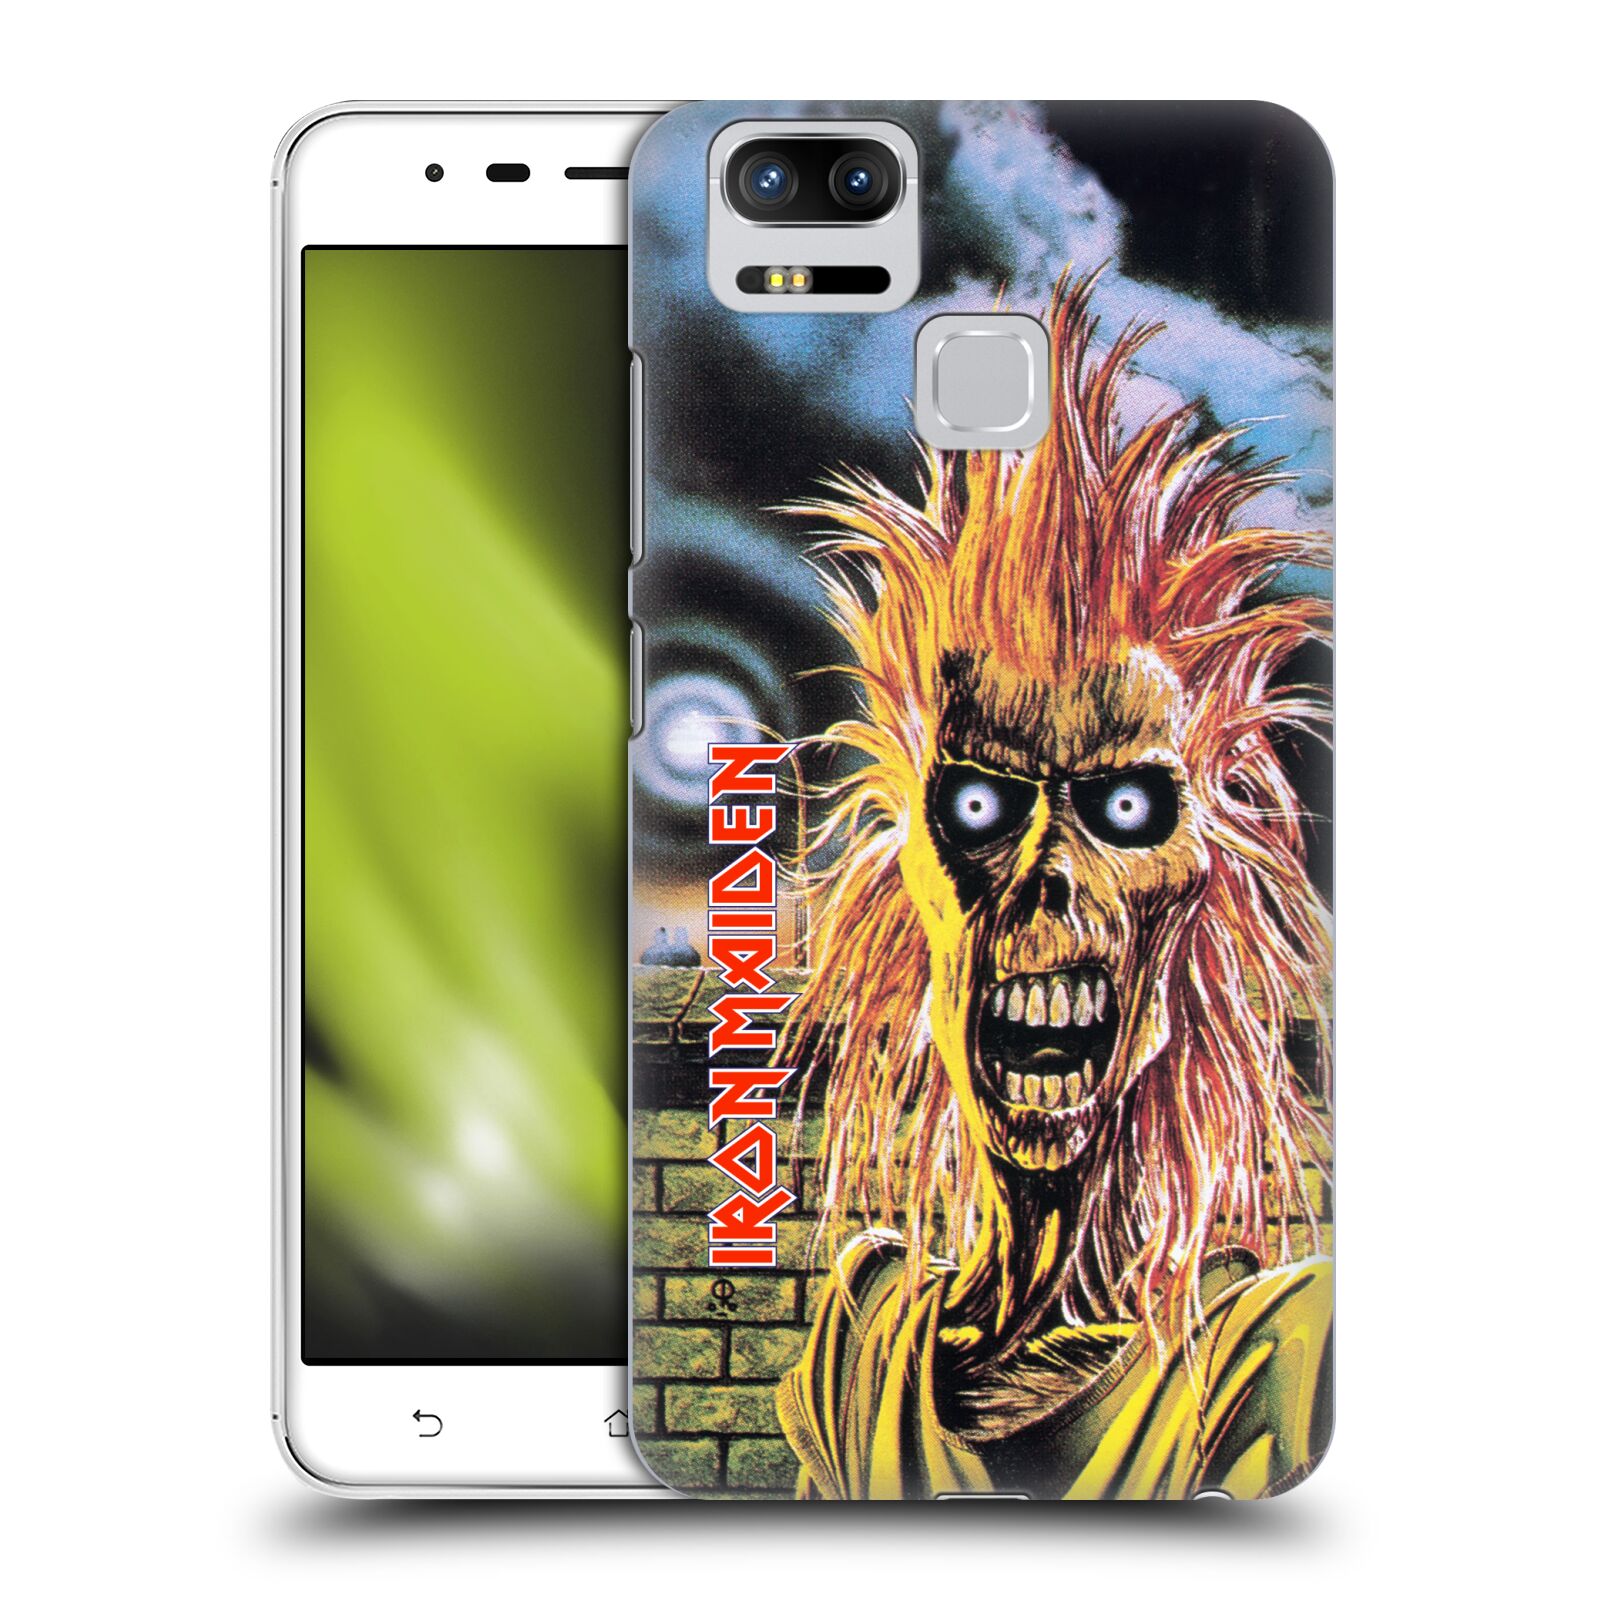 HEAD CASE plastový obal na mobil Asus Zenfone 3 Zoom ZE553KL Heavymetalová skupina Iron Maiden punker